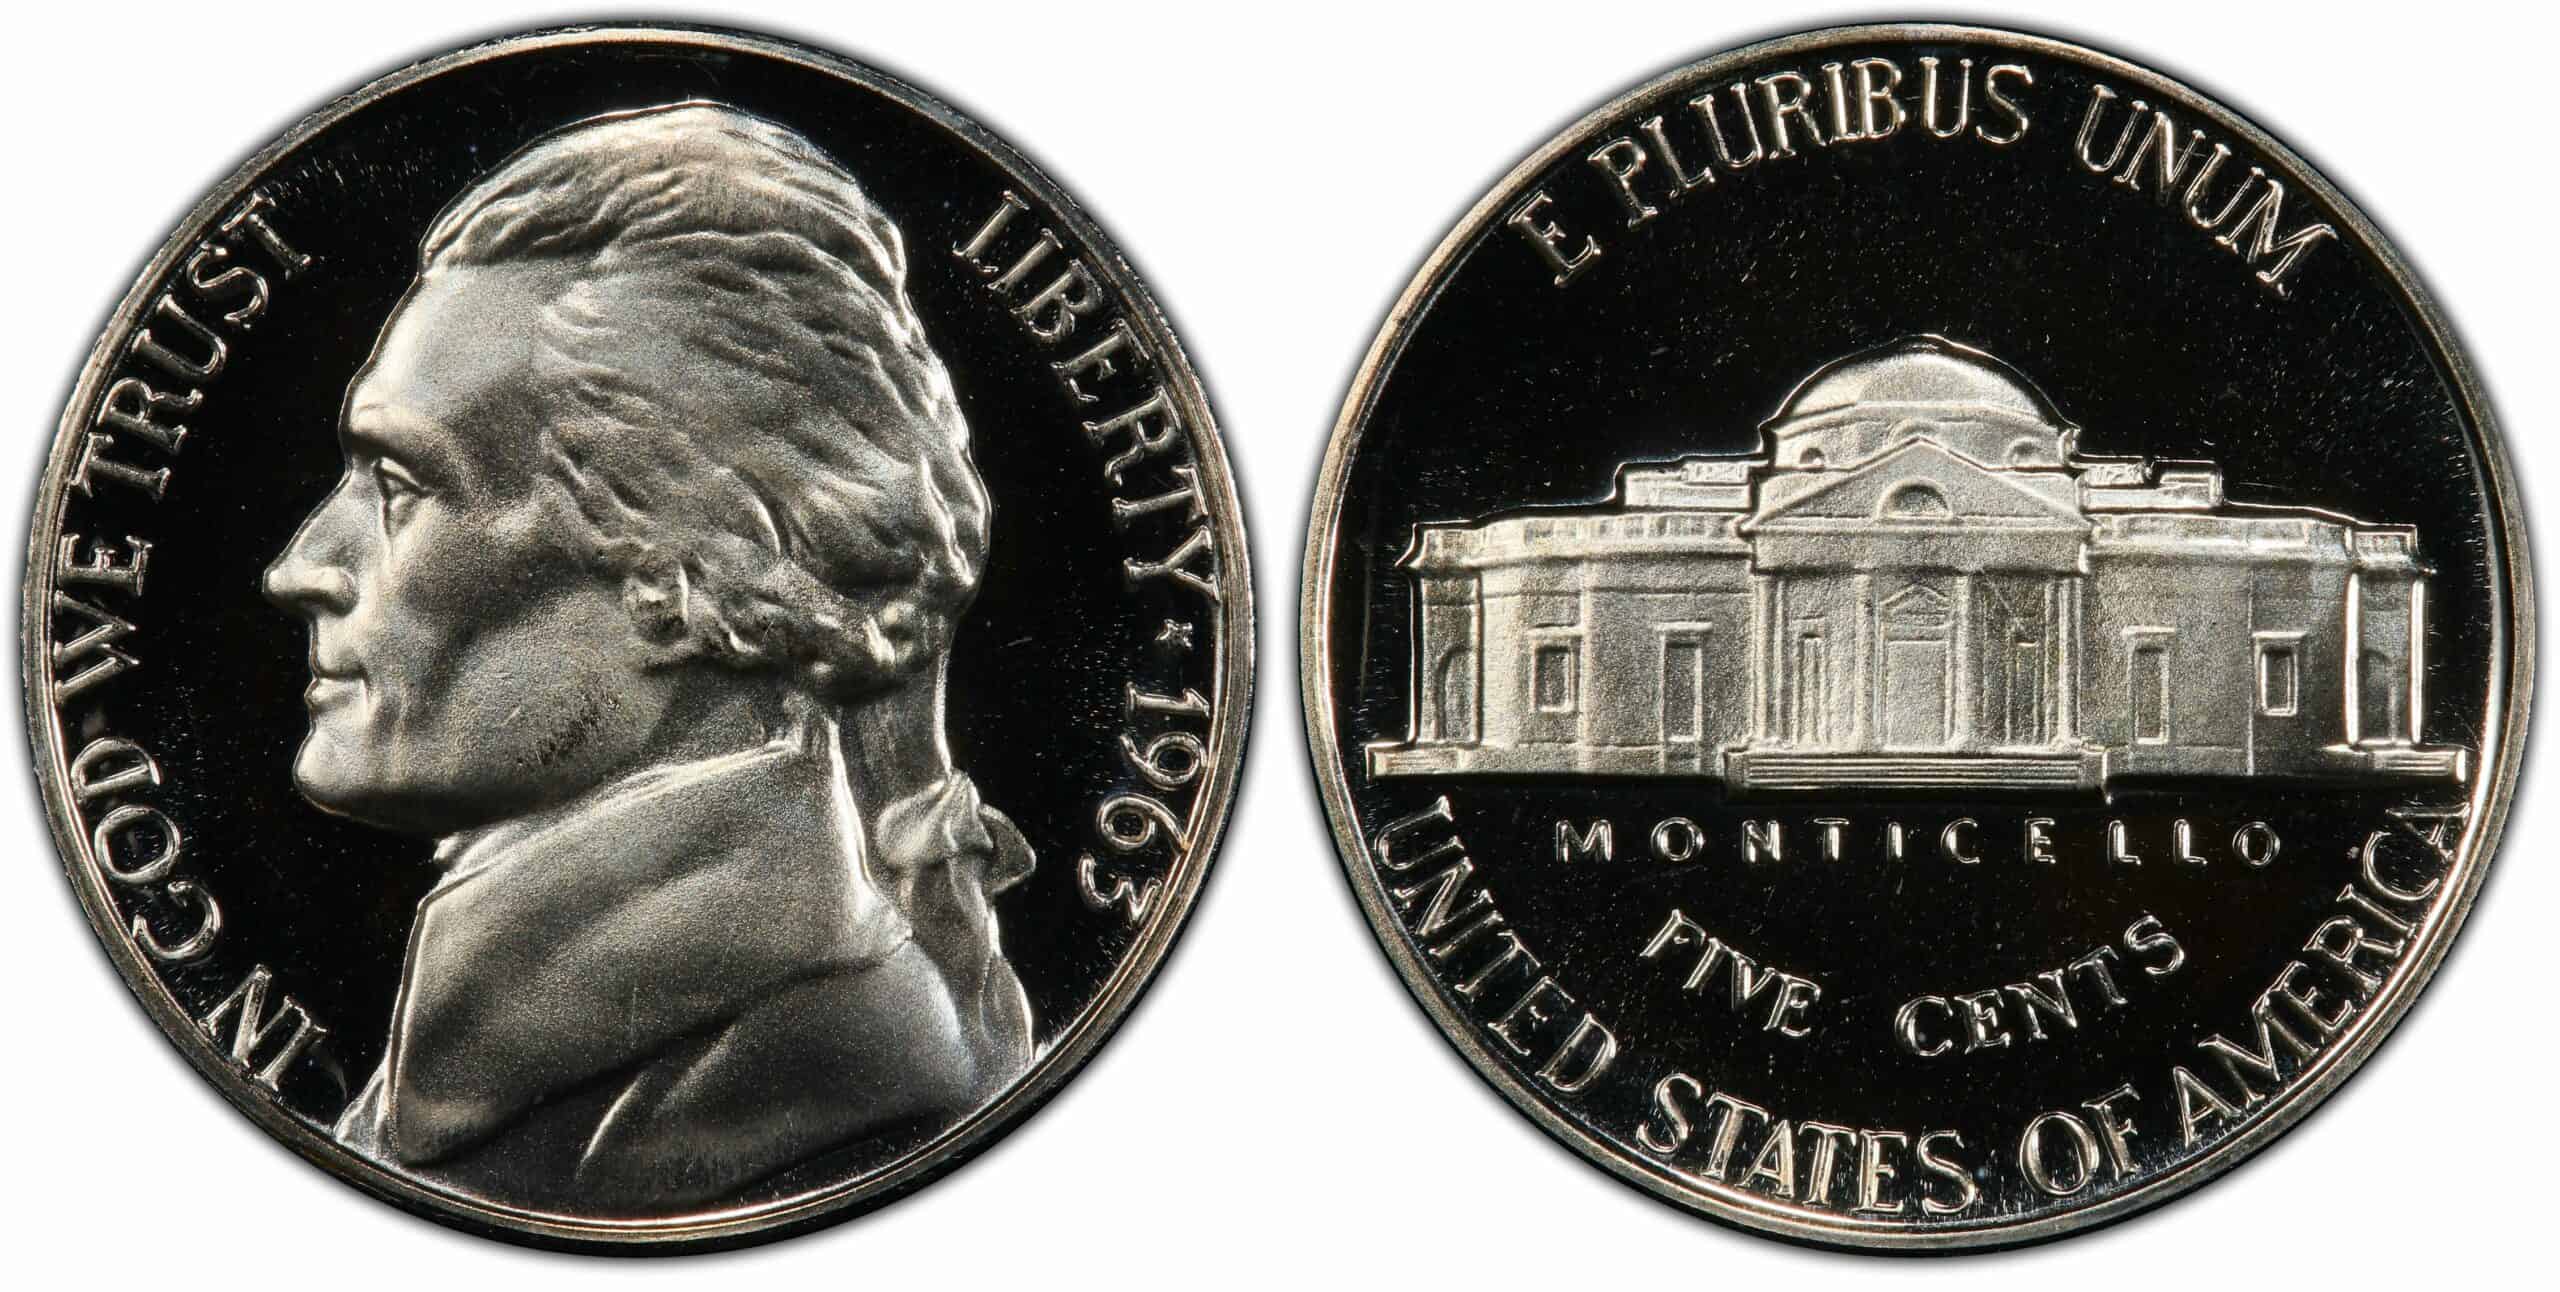 1963 Jefferson nickel (proof)